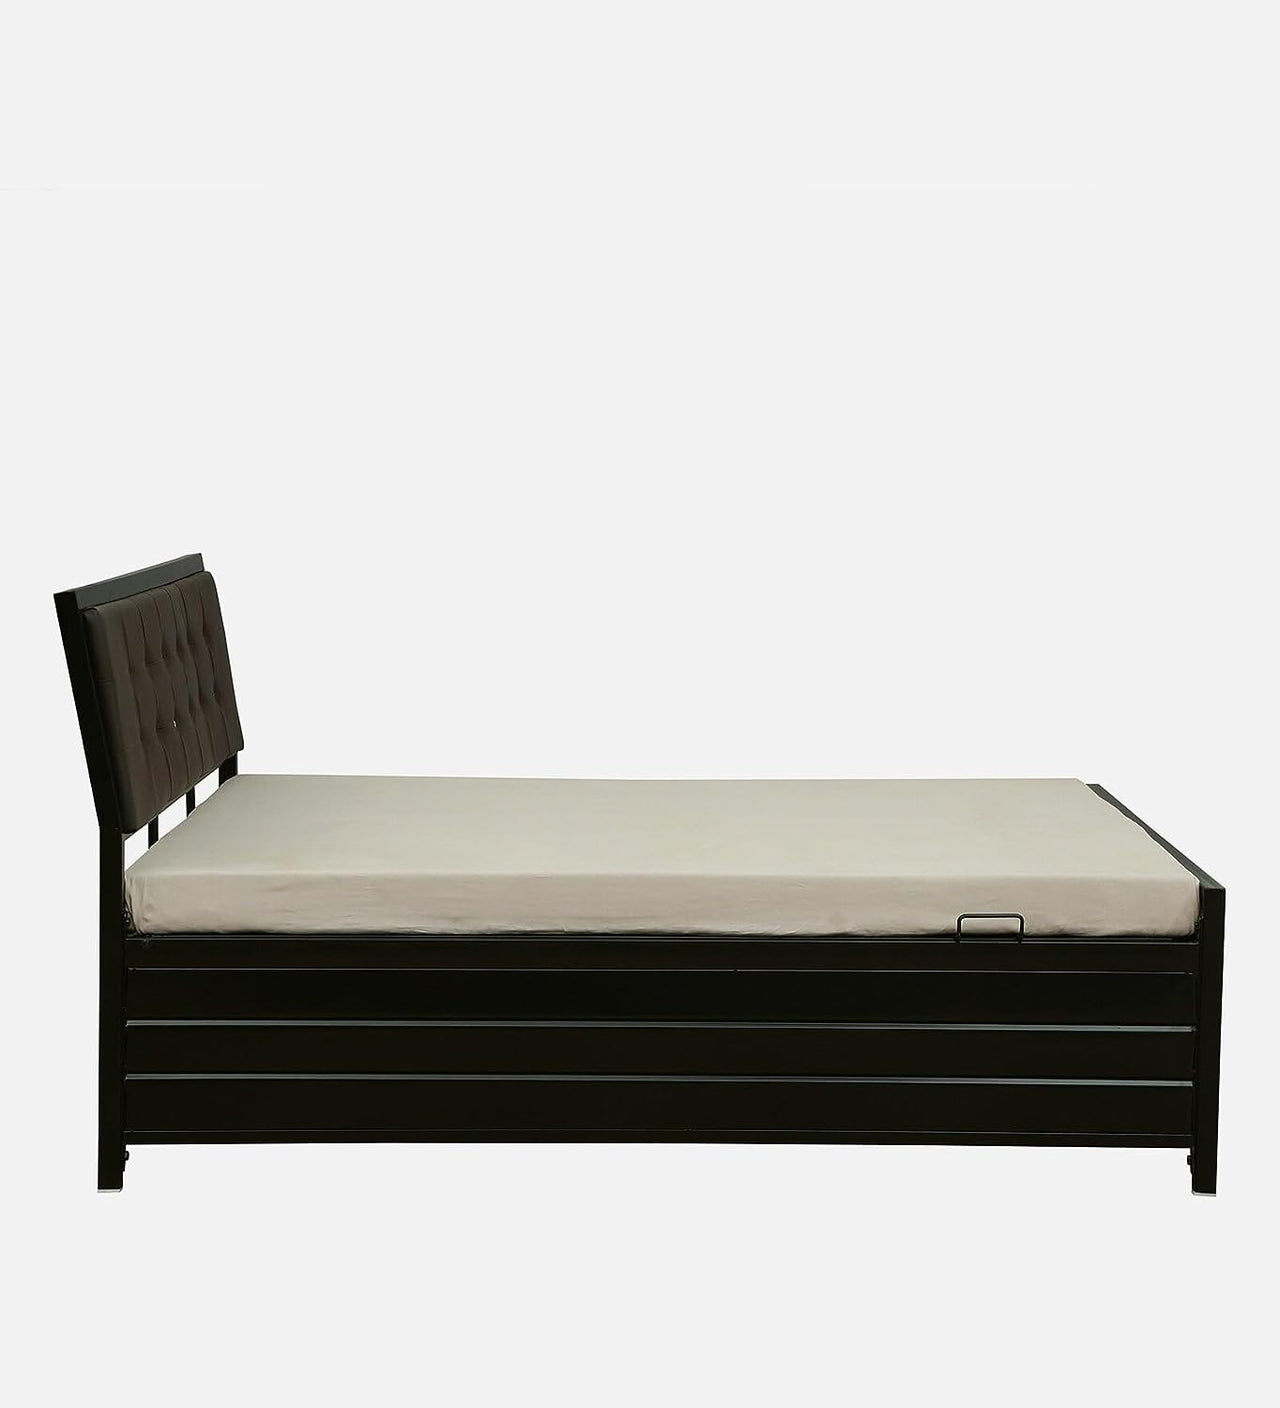 Heath Hydraulic Storage King Metal Bed with Black Cushion Headrest (Color - Black)